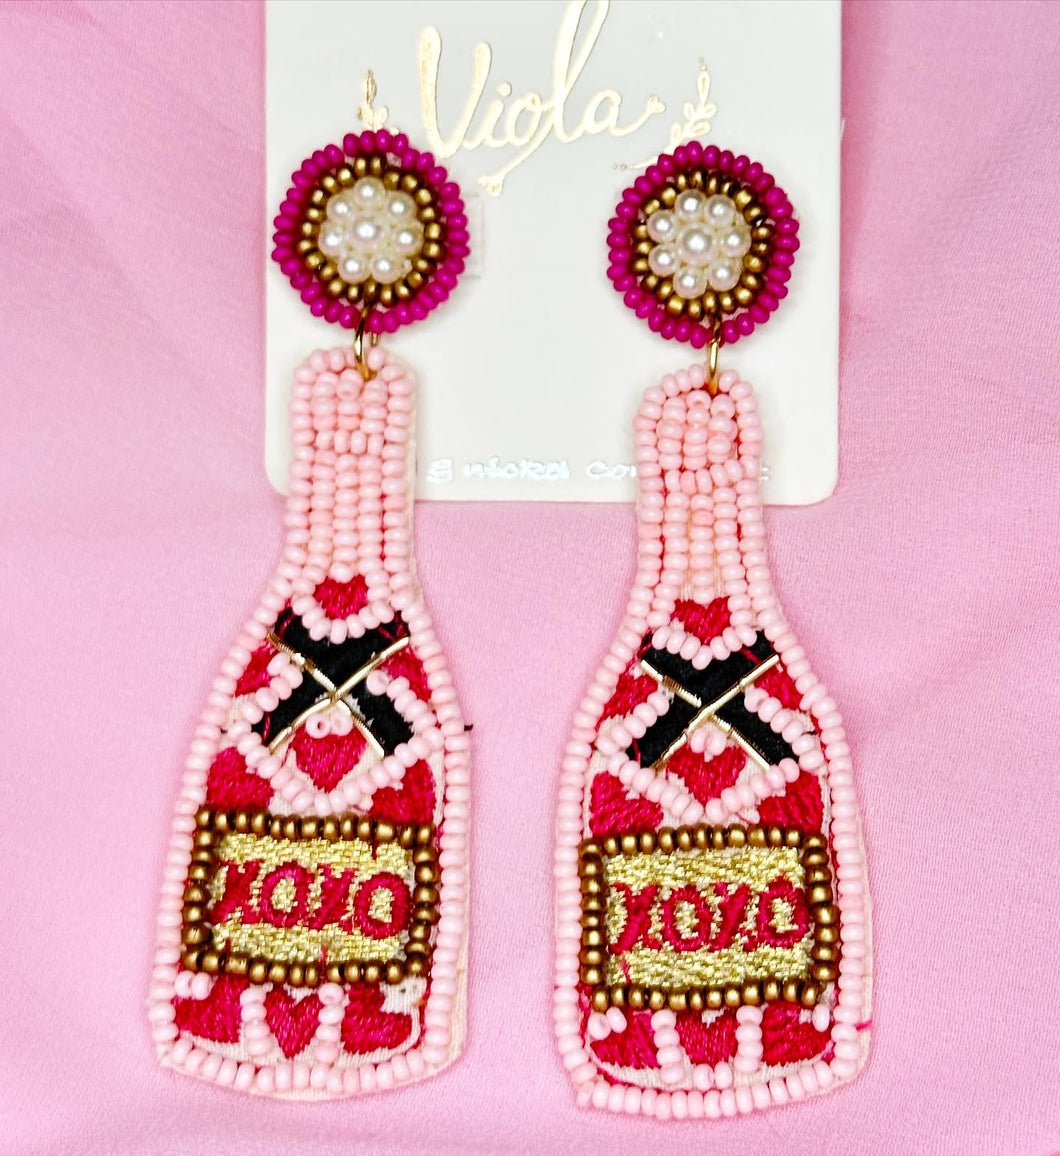 Galentines xoxo seed bead earrings in pink